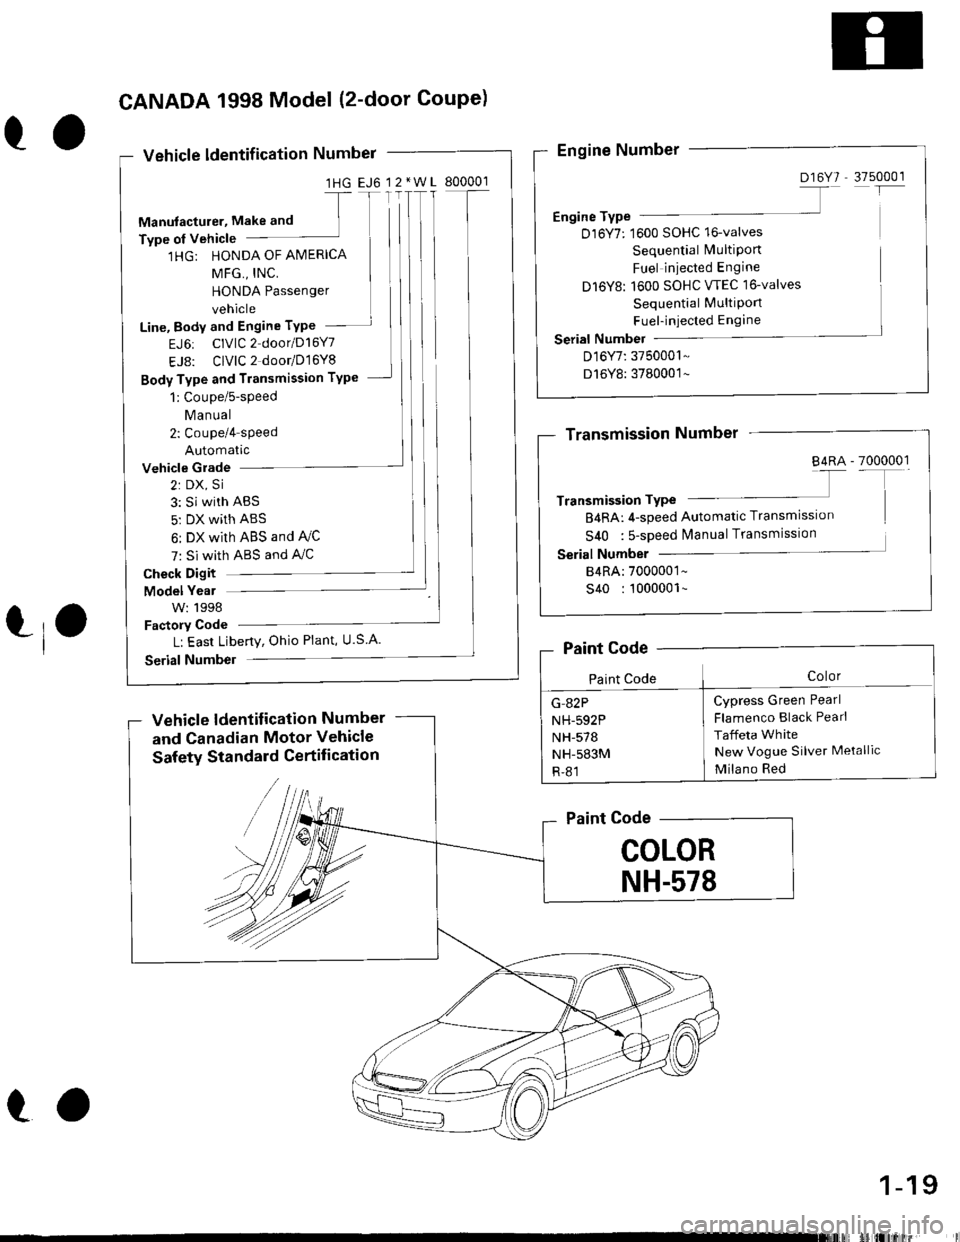 HONDA CIVIC 1999 6.G Owners Manual Vehicle ldentif ication Numbel
1HG EJ6 12*W
1HG: HONDA OF AMERICA
MFG,, INC,
HONDA Passenger
vehicle
Line, Body and Engine TYPe
EJ6: CIVIC 2 door/D16Y7
EJ8: CIVIC 2 dootD16Y8
Body Type and Transmissio